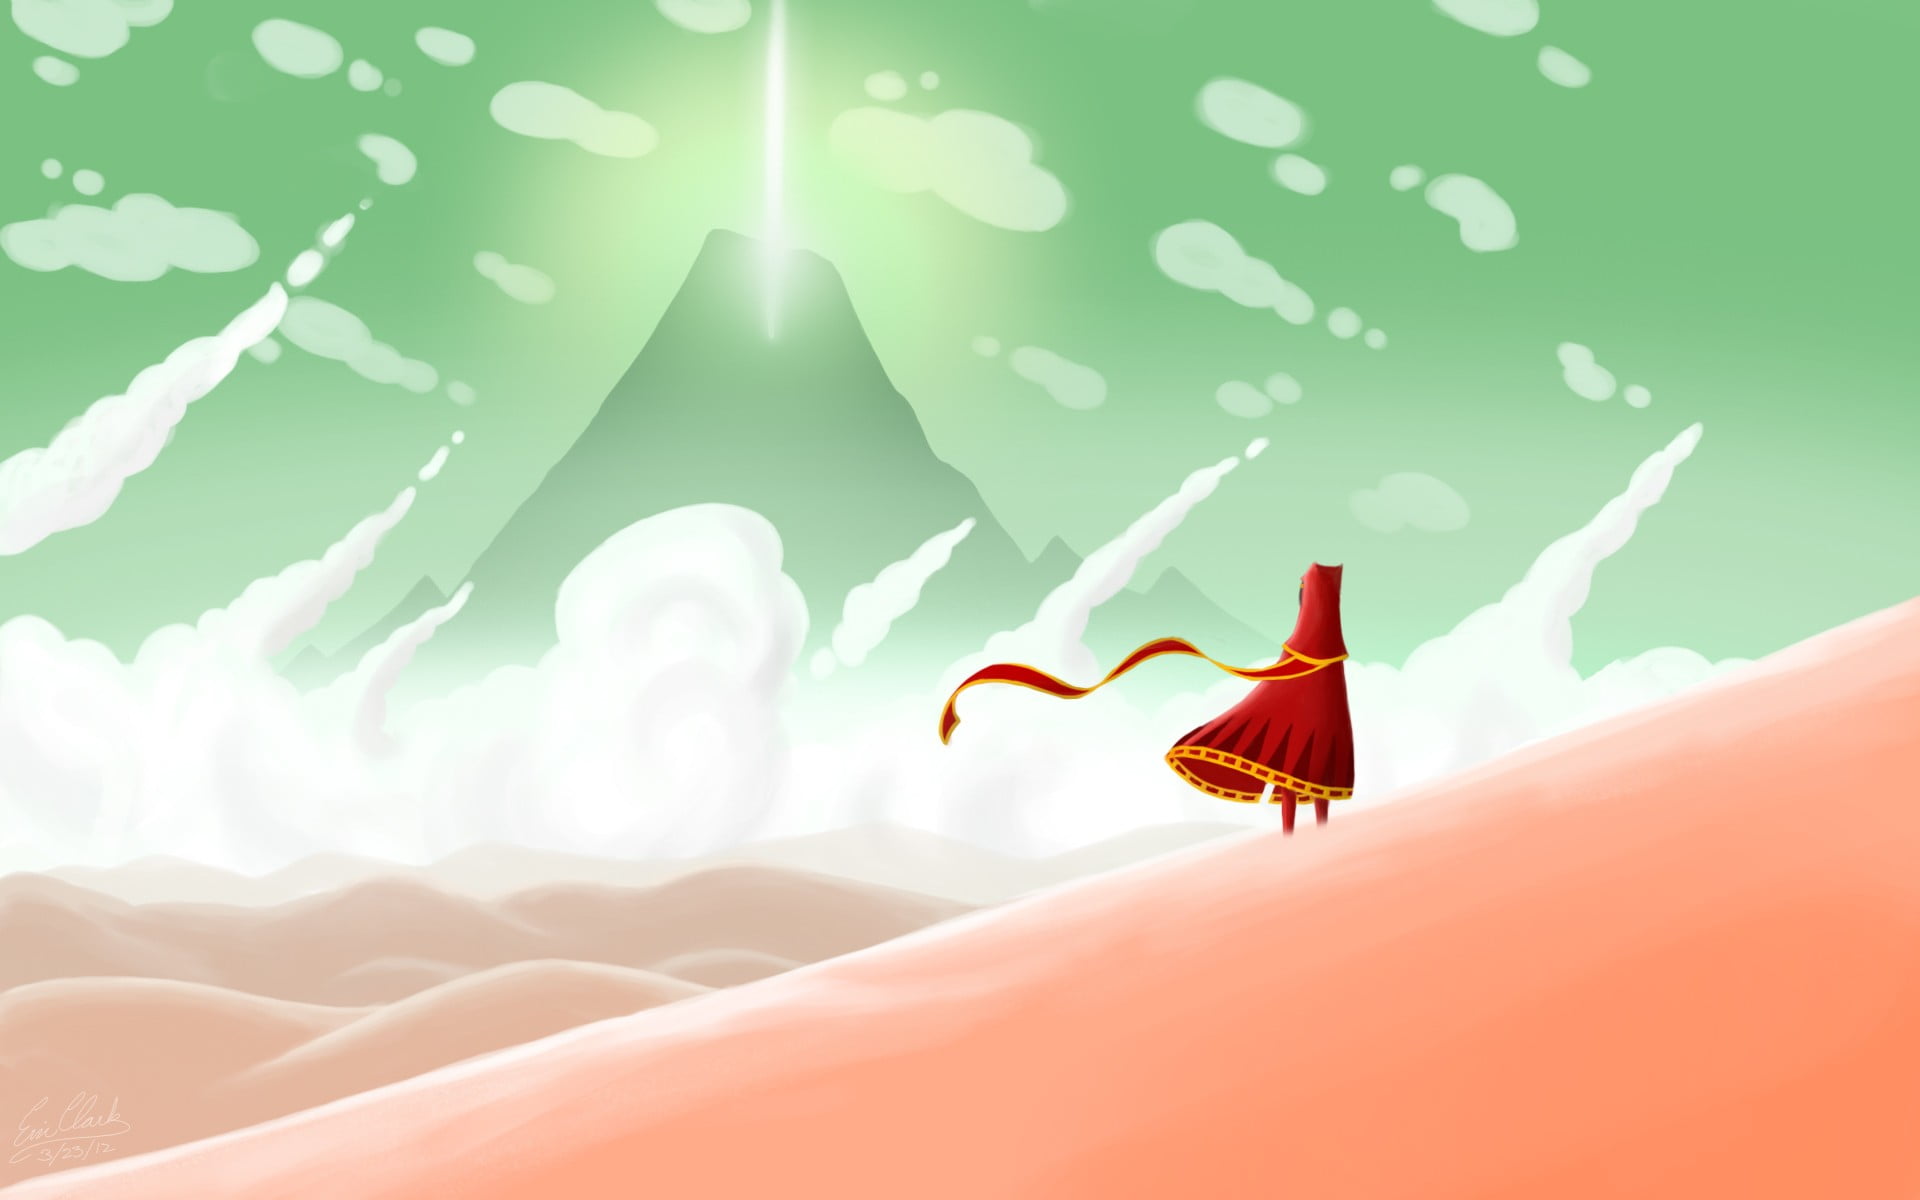 person wearing red cape near desert illustration, fantasy art